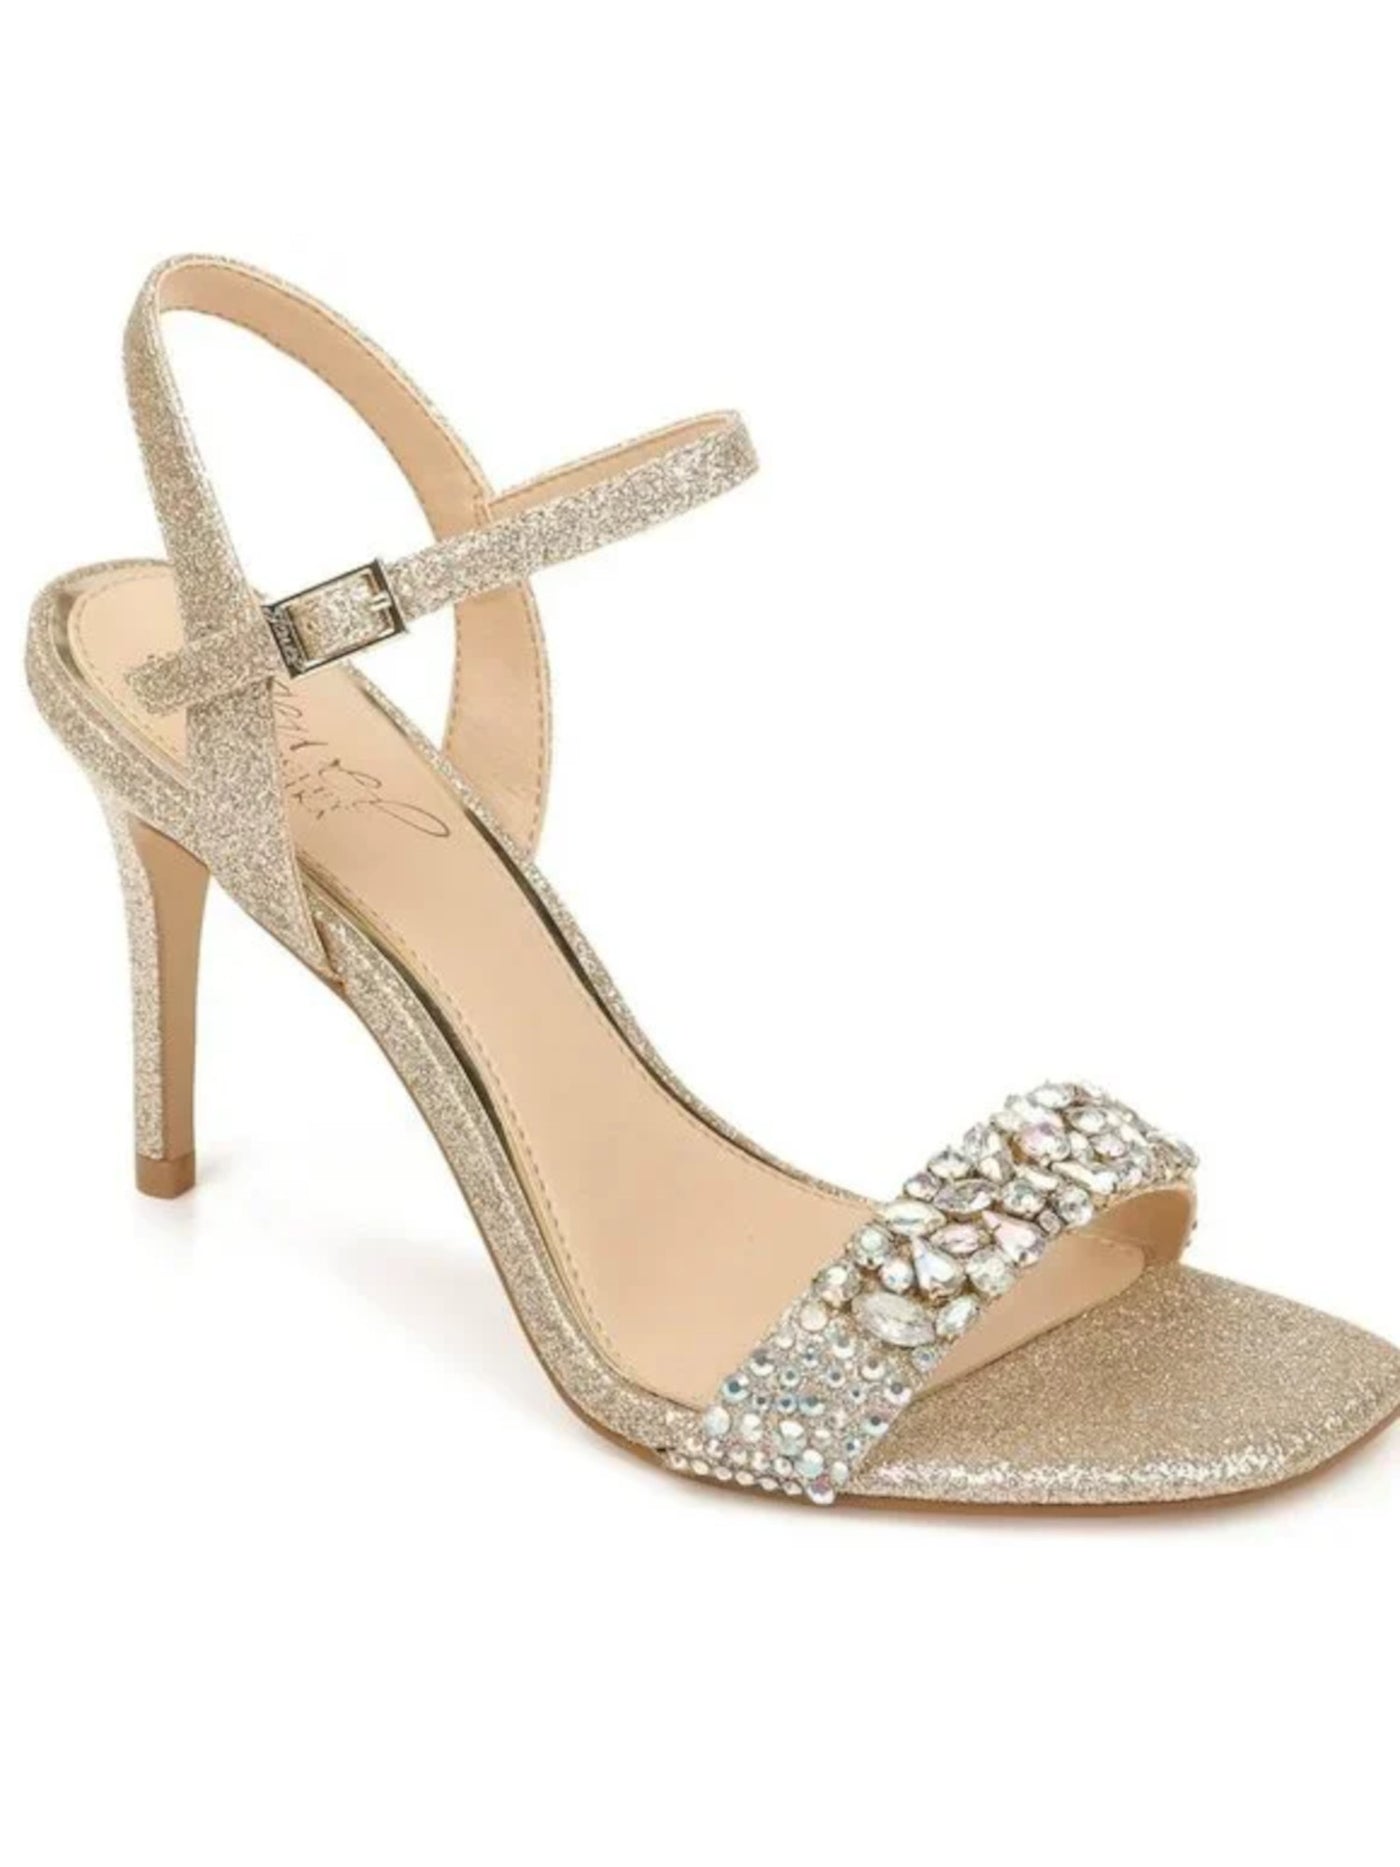 JEWEL BADGLEY MISCHKA Womens Gold Padded Glitter Embellished Ankle Strap Natasha Square Toe Stiletto Buckle Dress Slingback Sandal 9.5 M